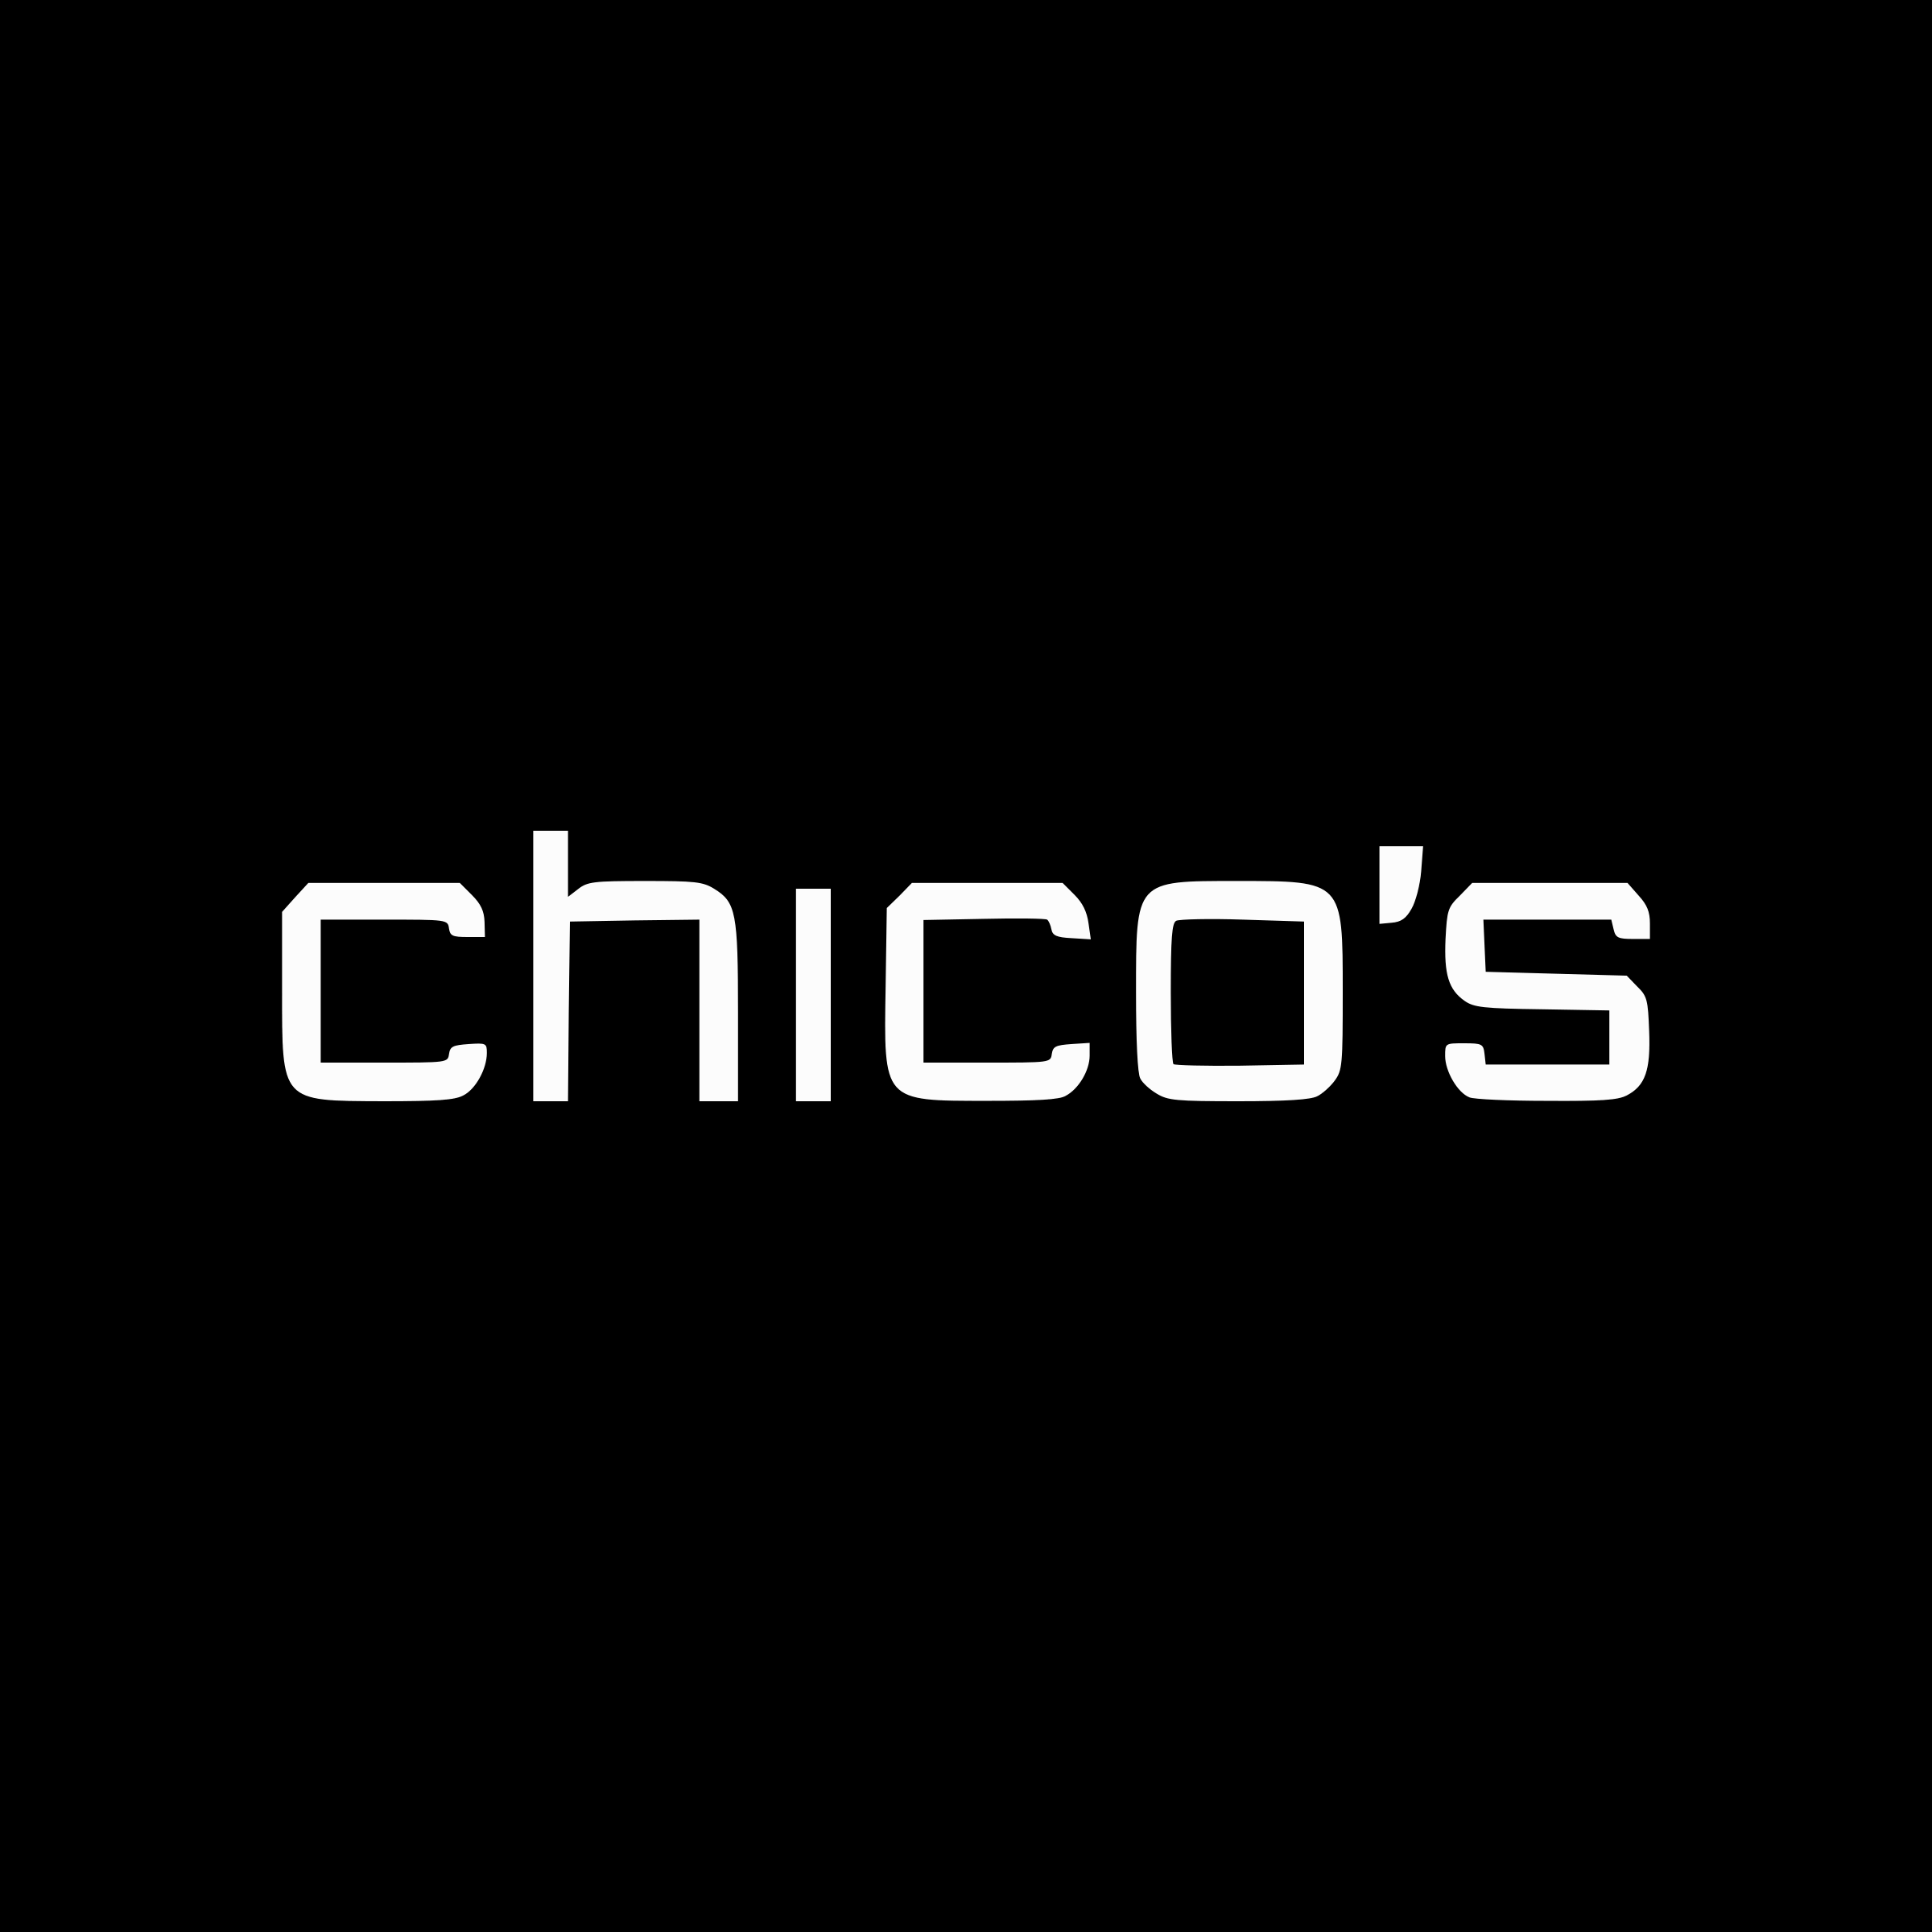 Chico's Logo - Chicos Logo PNG Transparent & SVG Vector - Freebie Supply